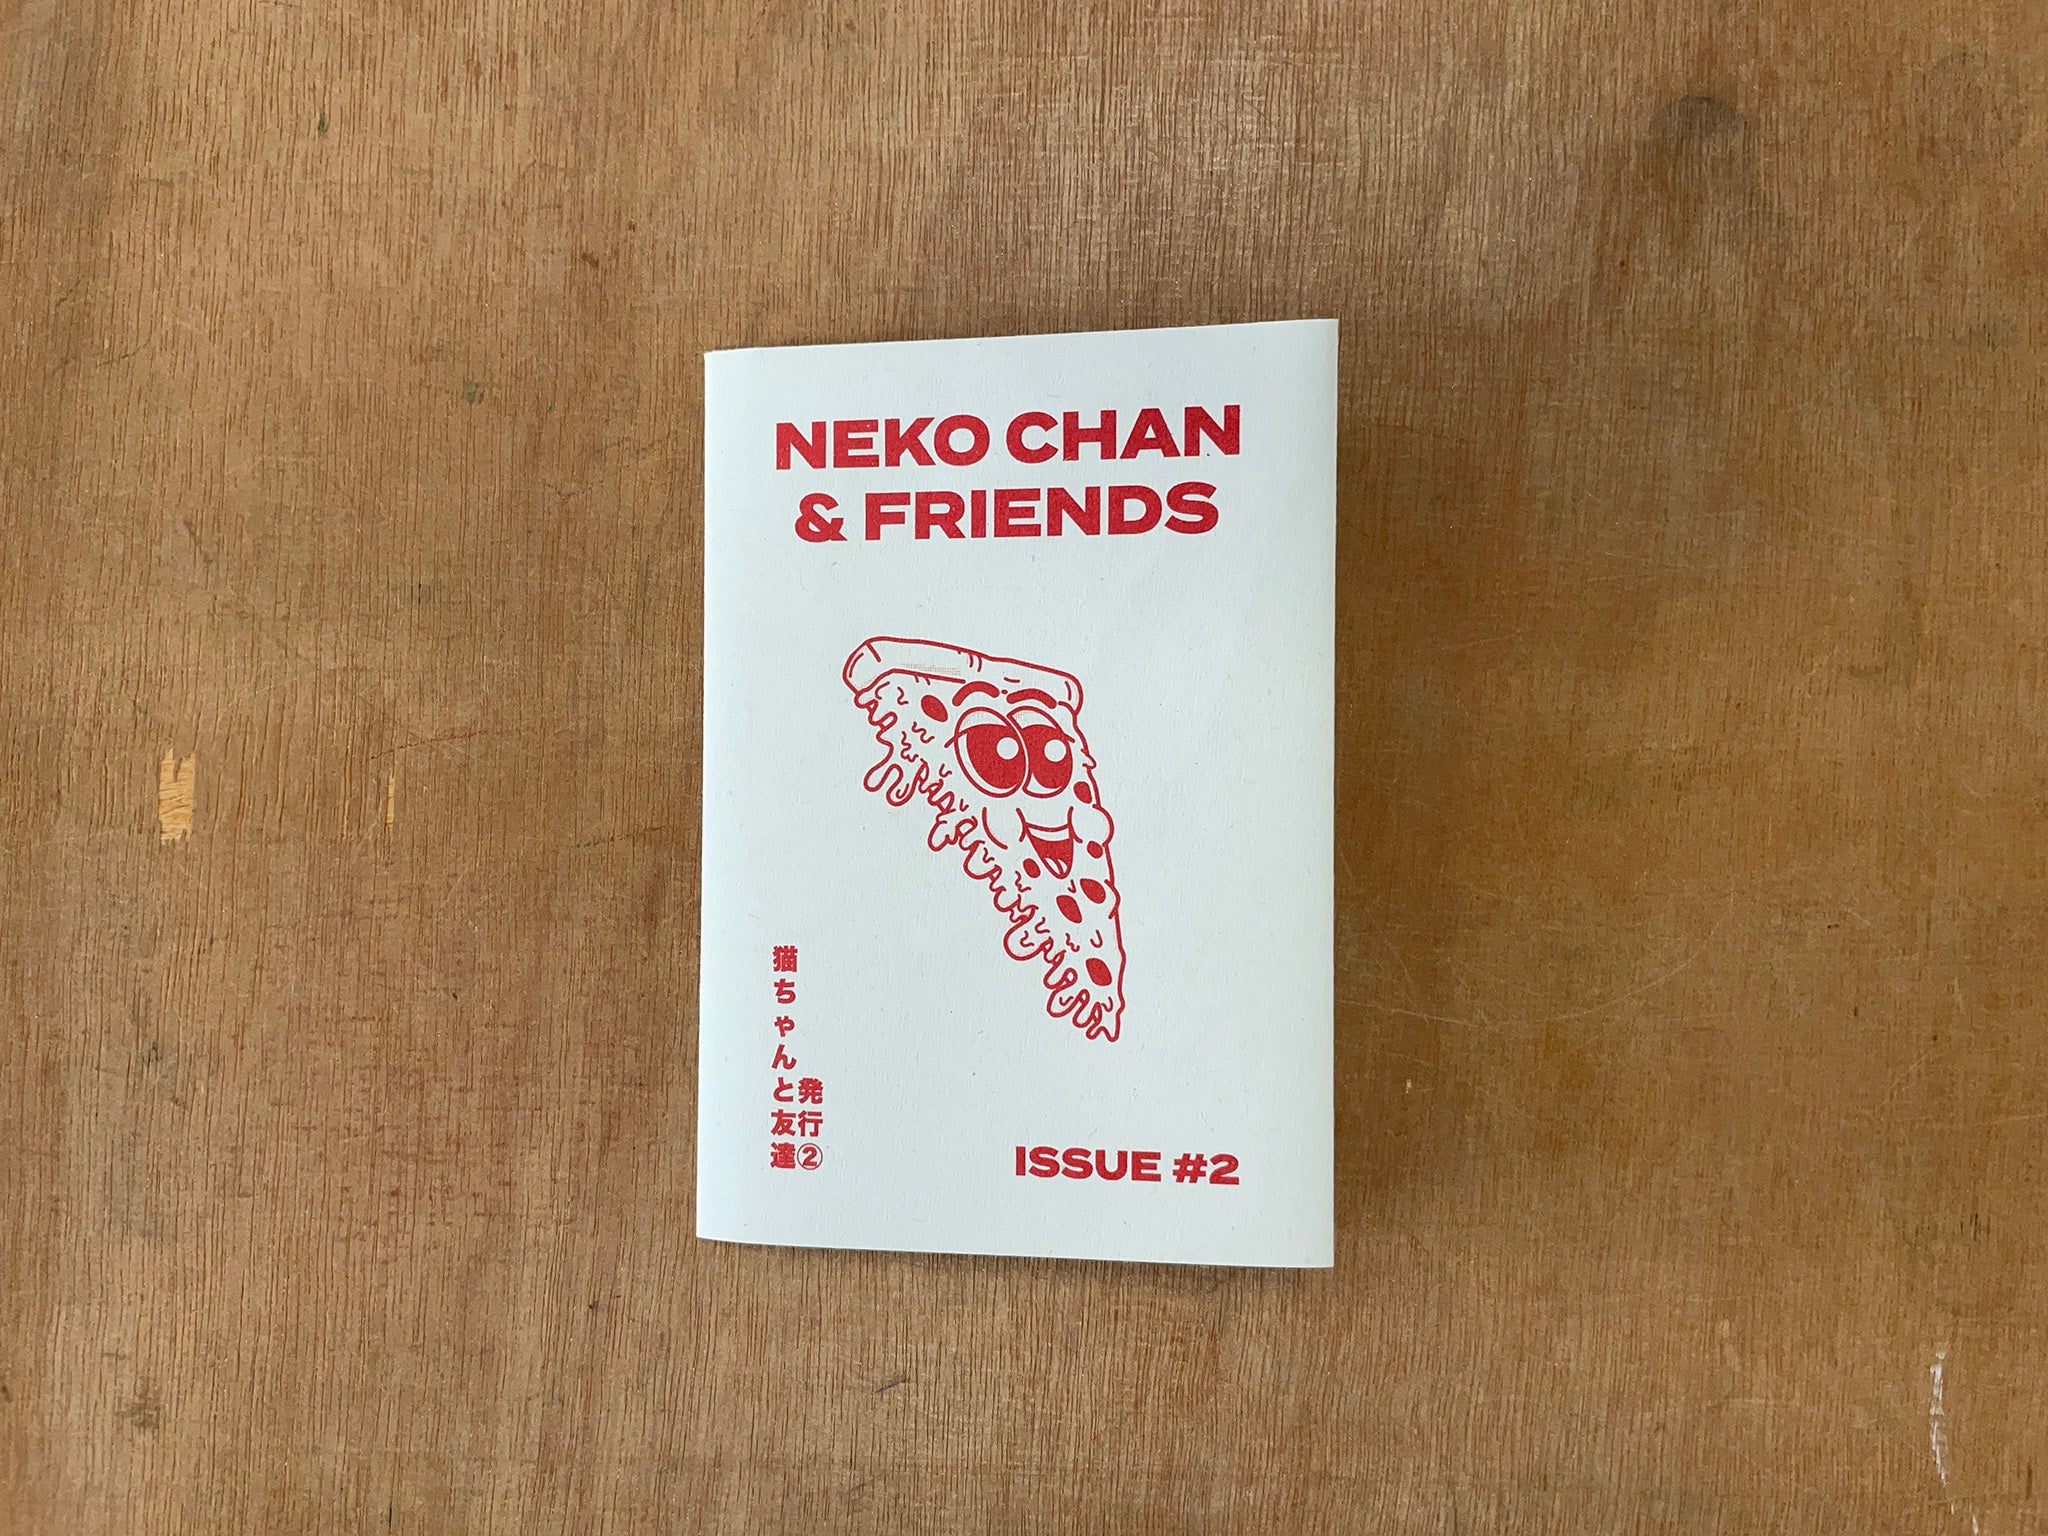 NEKO CHAN & FRIENDS ISSUE #2 by Hannah Killoh